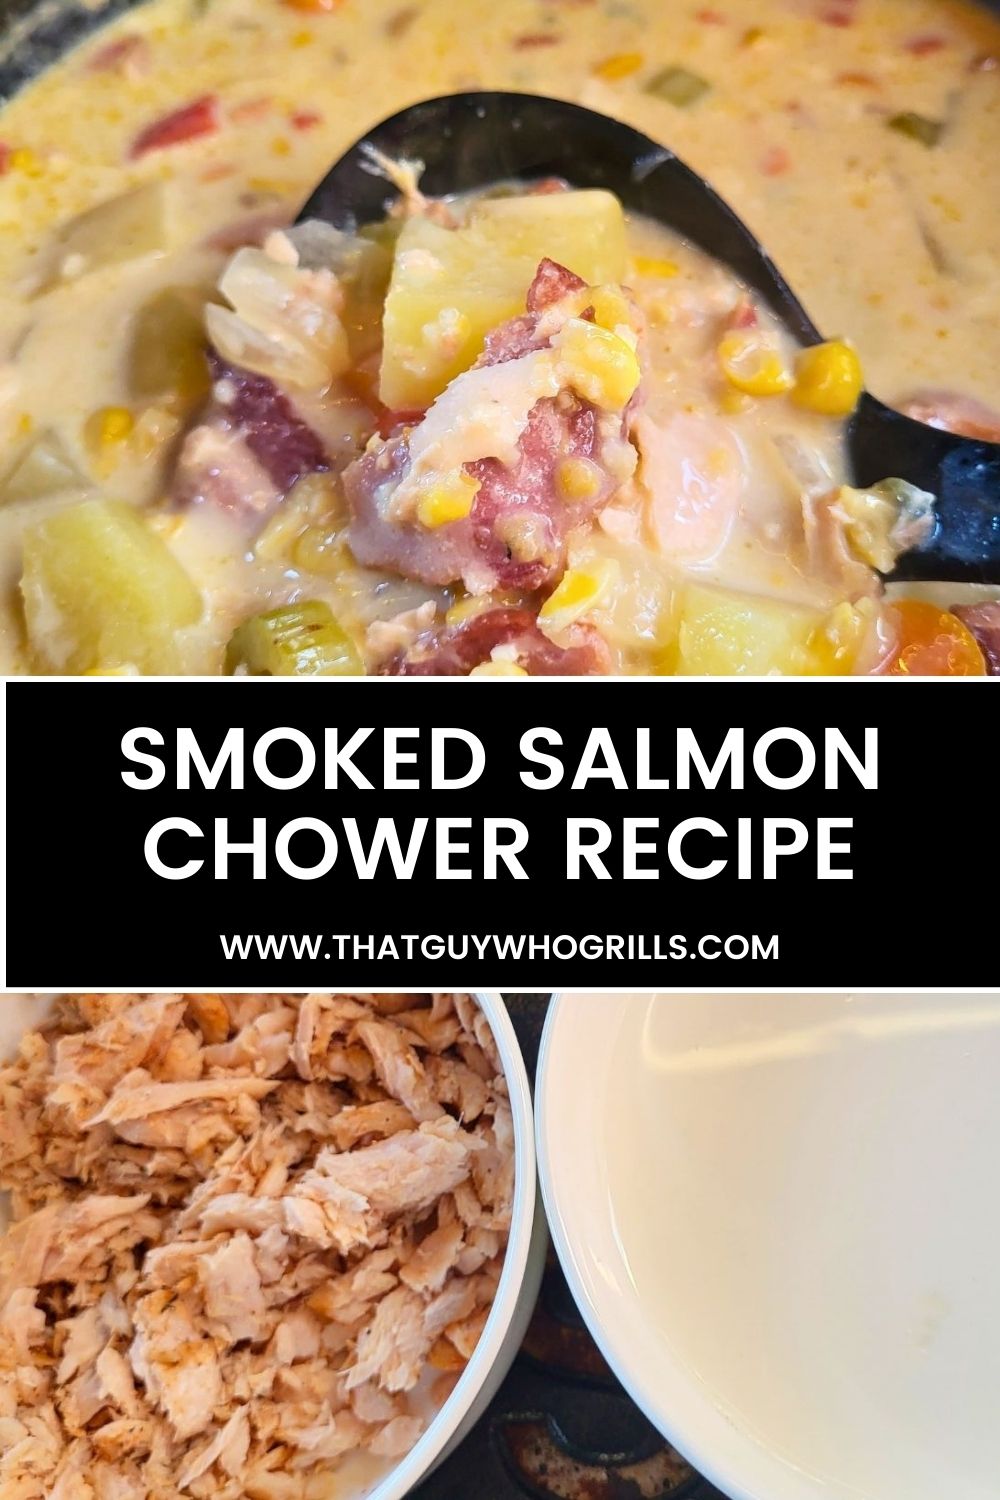 Smoked Salmon Chowder Recipe